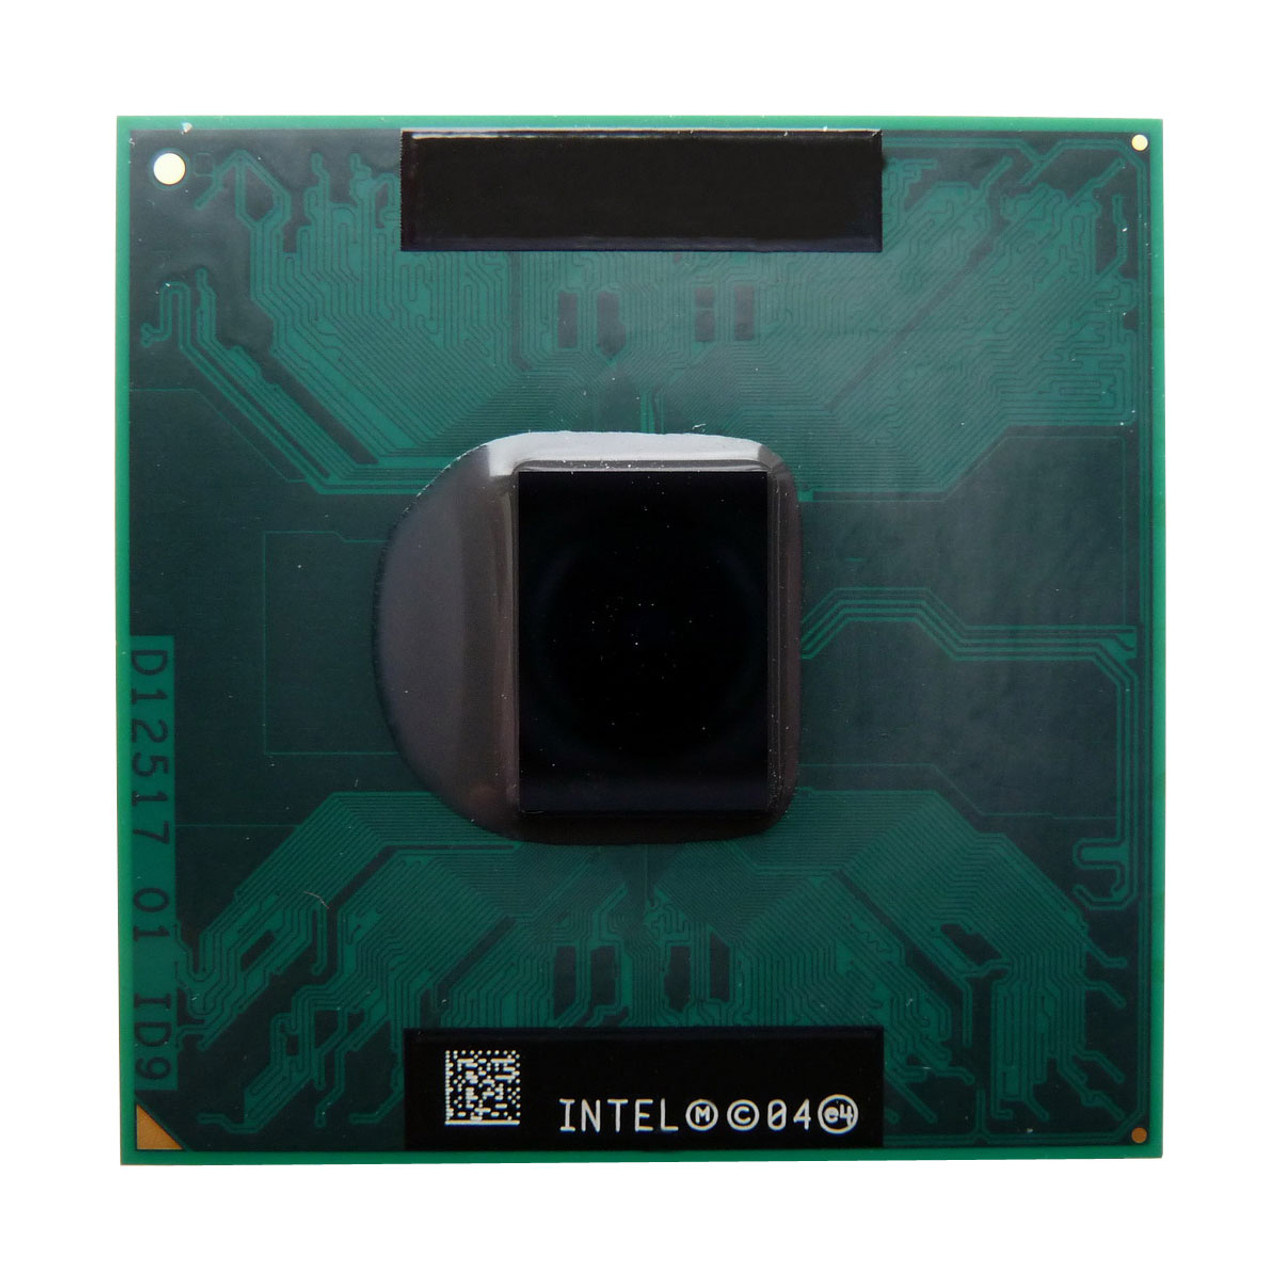 SL8VR - Intel Core DUO T2300 1.66GHz Dual Core 2MB L2 Cache 667MHz FSB Socket PPGA478 65NM 31W Processor